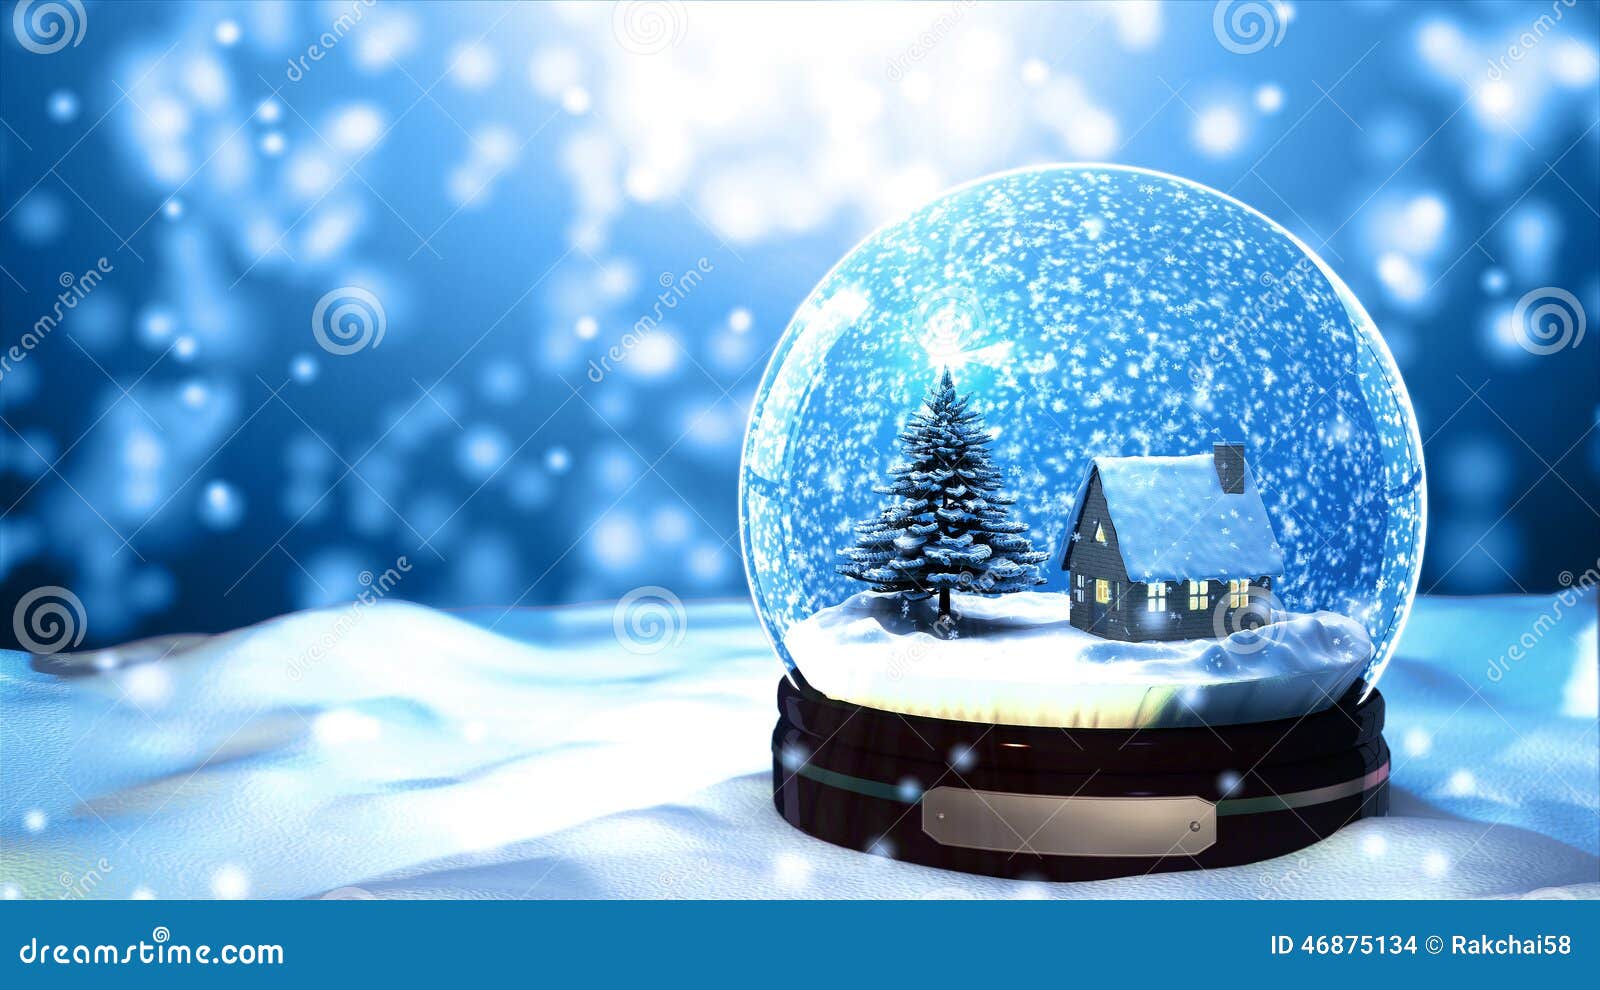 christmas snow globe snowflake with snowfall on blue background